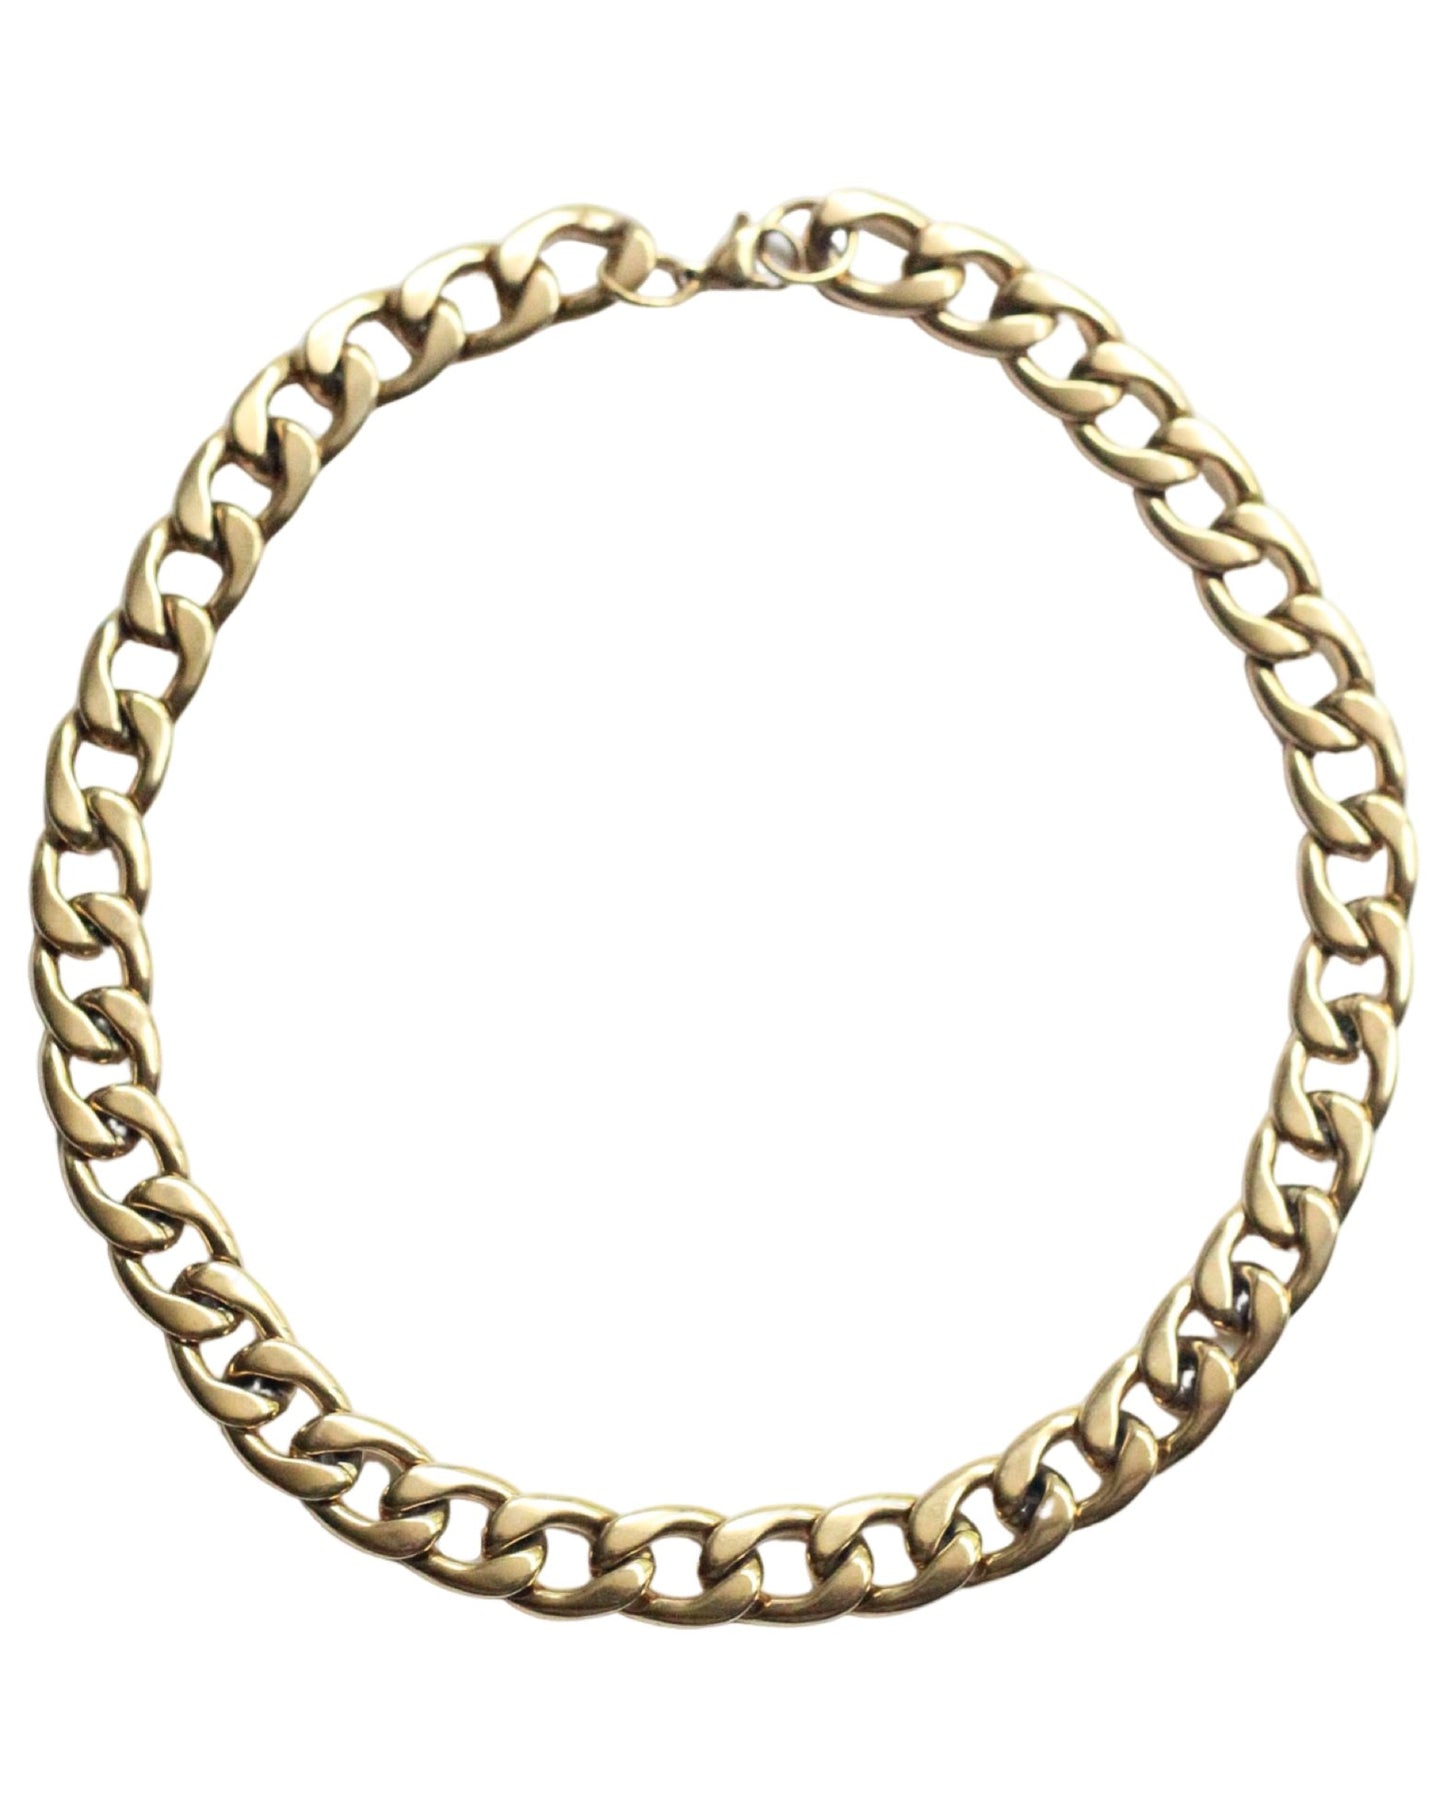 BADDIE CHAIN - GOLD - DE.FINE Collection Jewelry